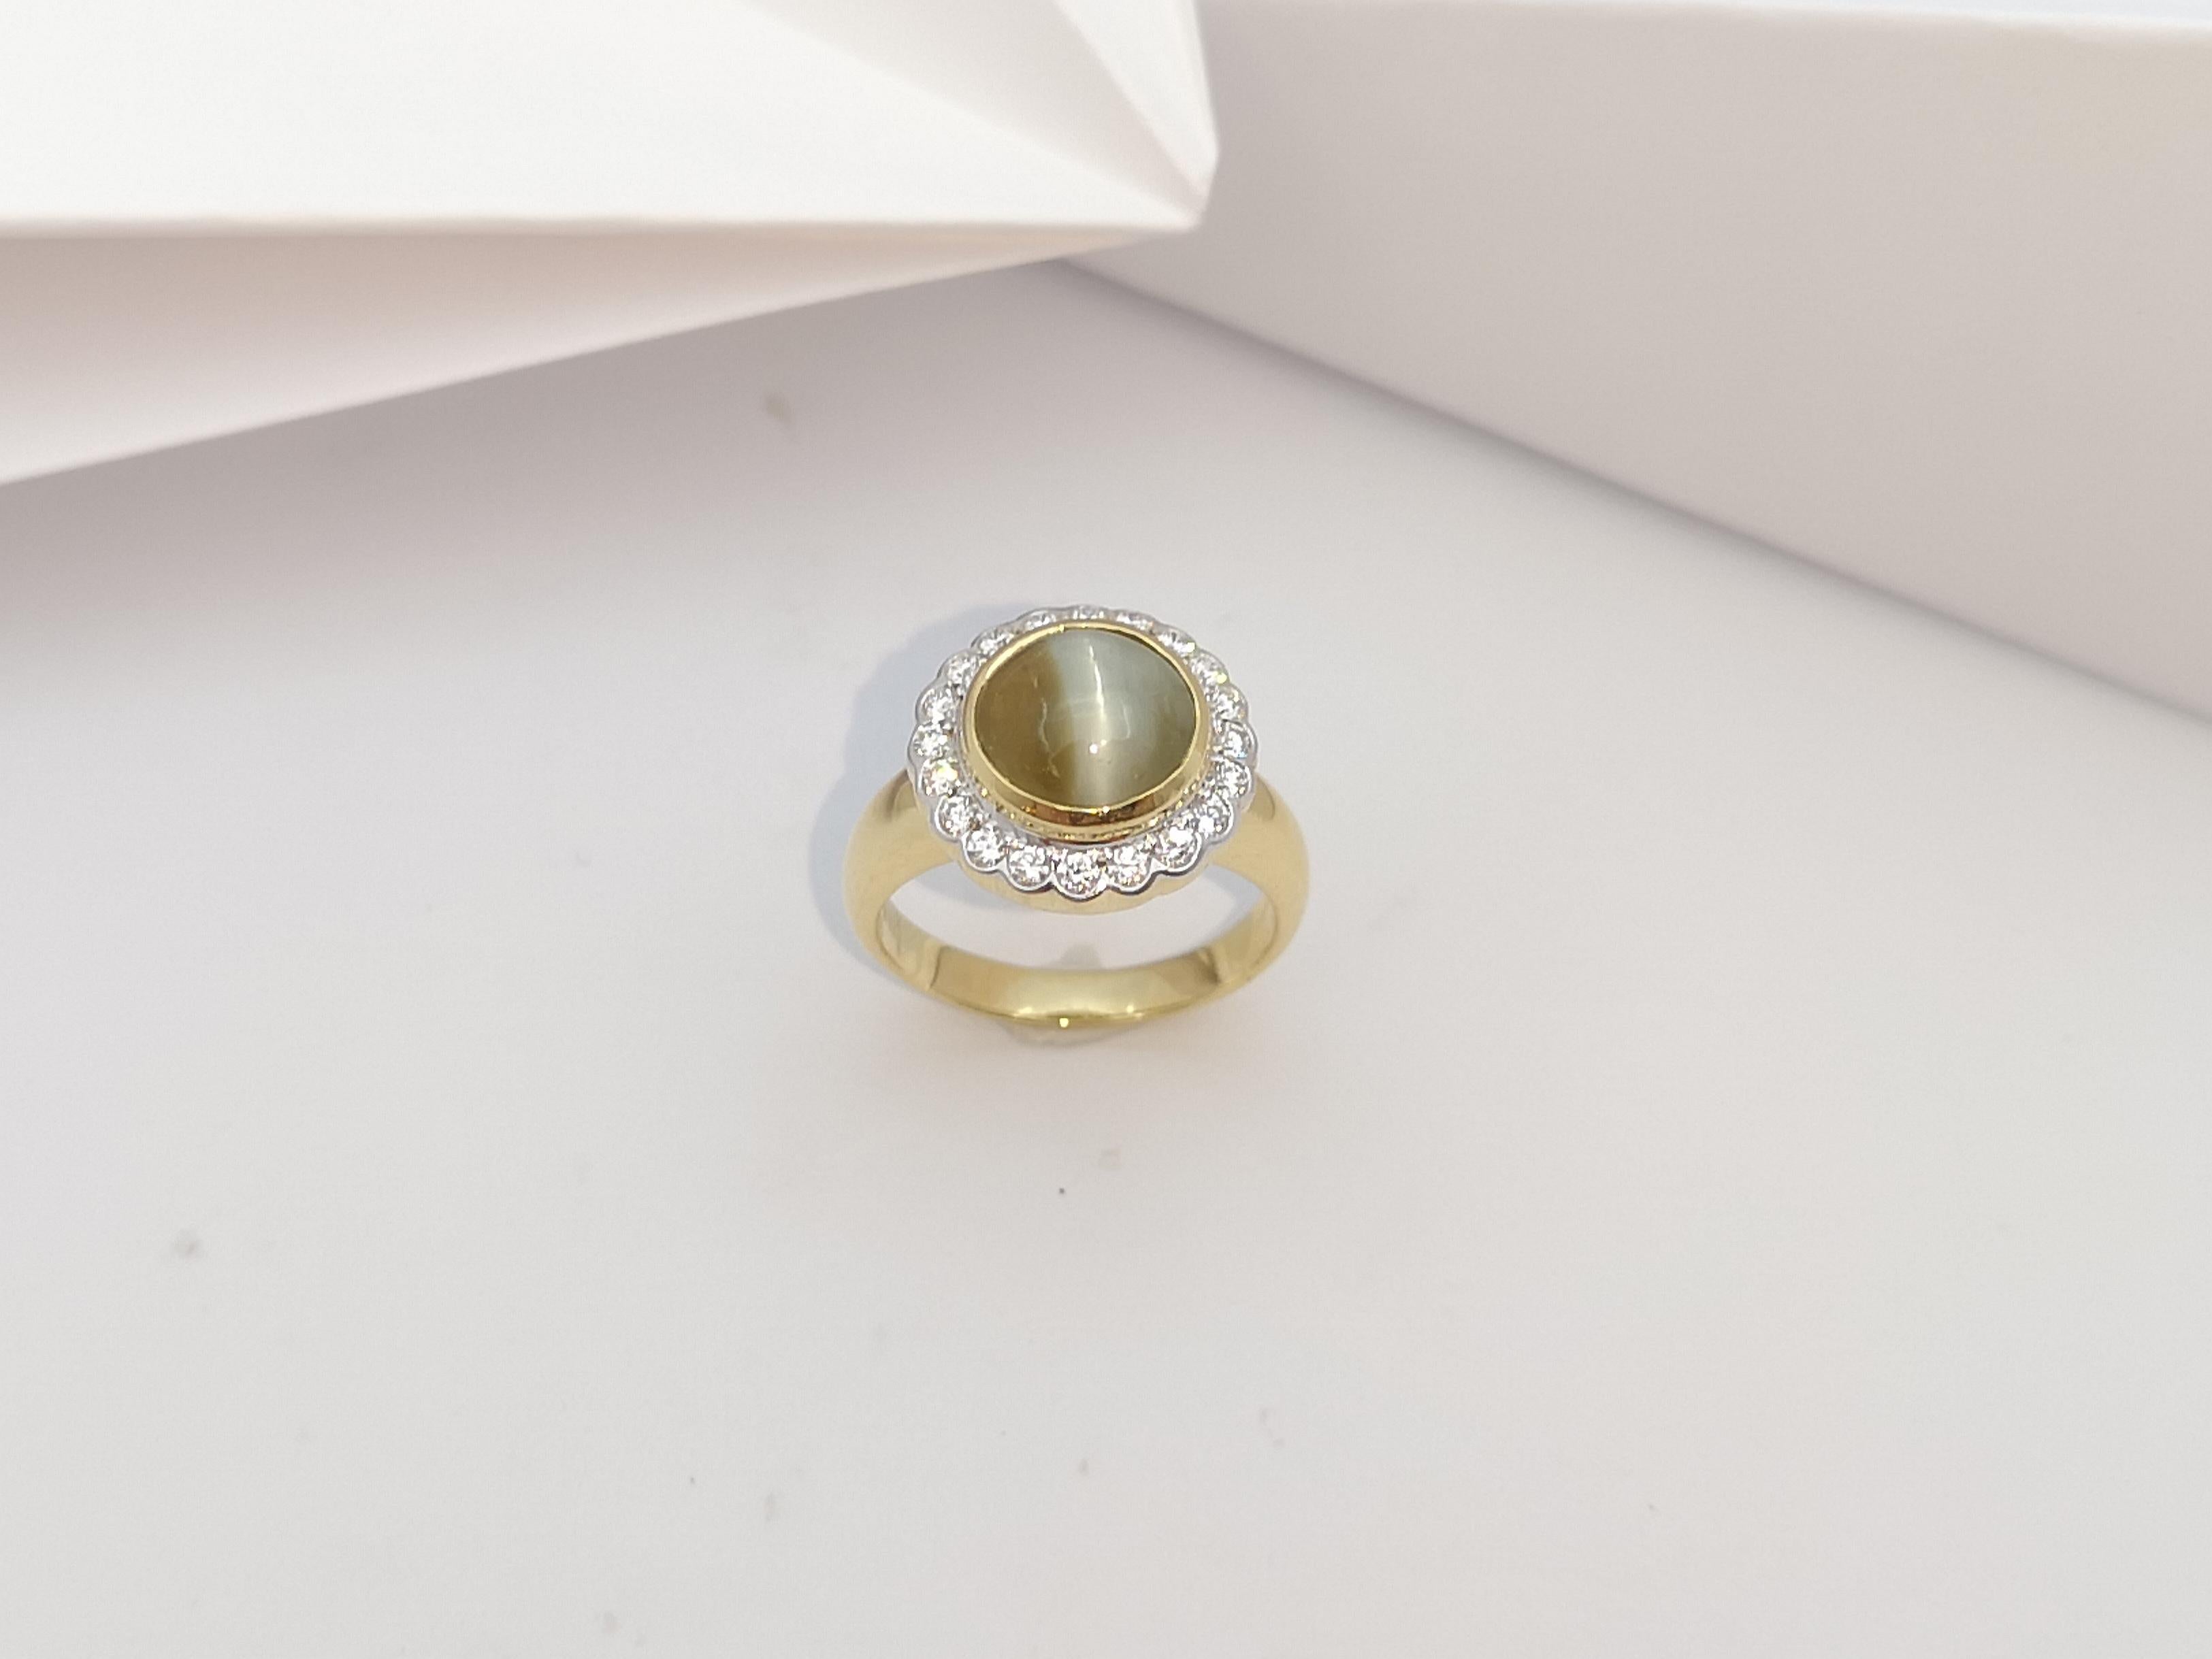 Chrysoberyl Cat's Eye with Diamond Ring Set in 18 Karat Gold For Sale 6